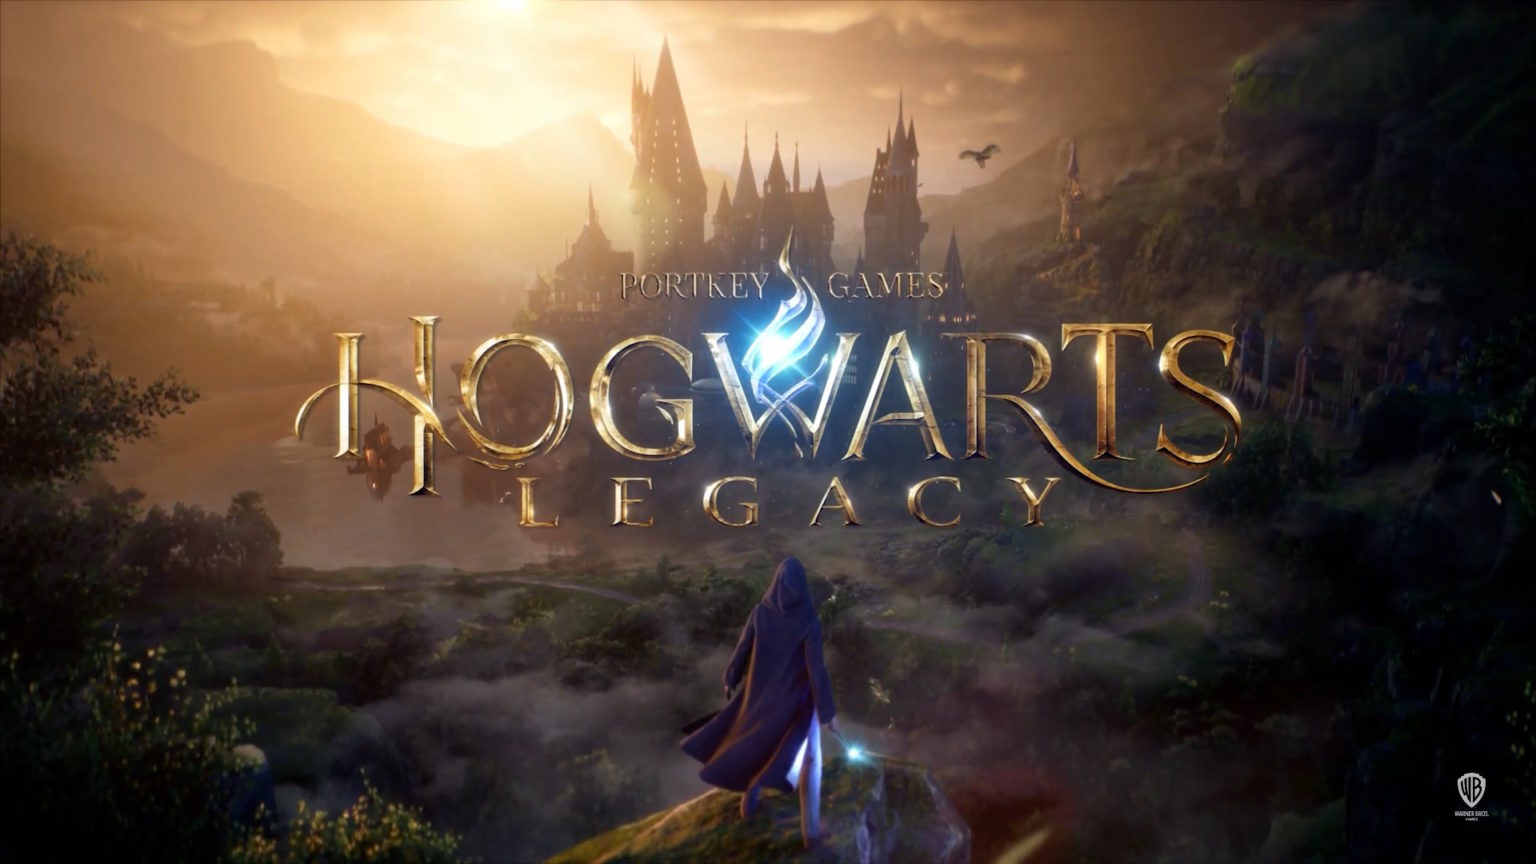 Warner Bros. Games Debuts Official Hogwarts Legacy Cinematic Trailer